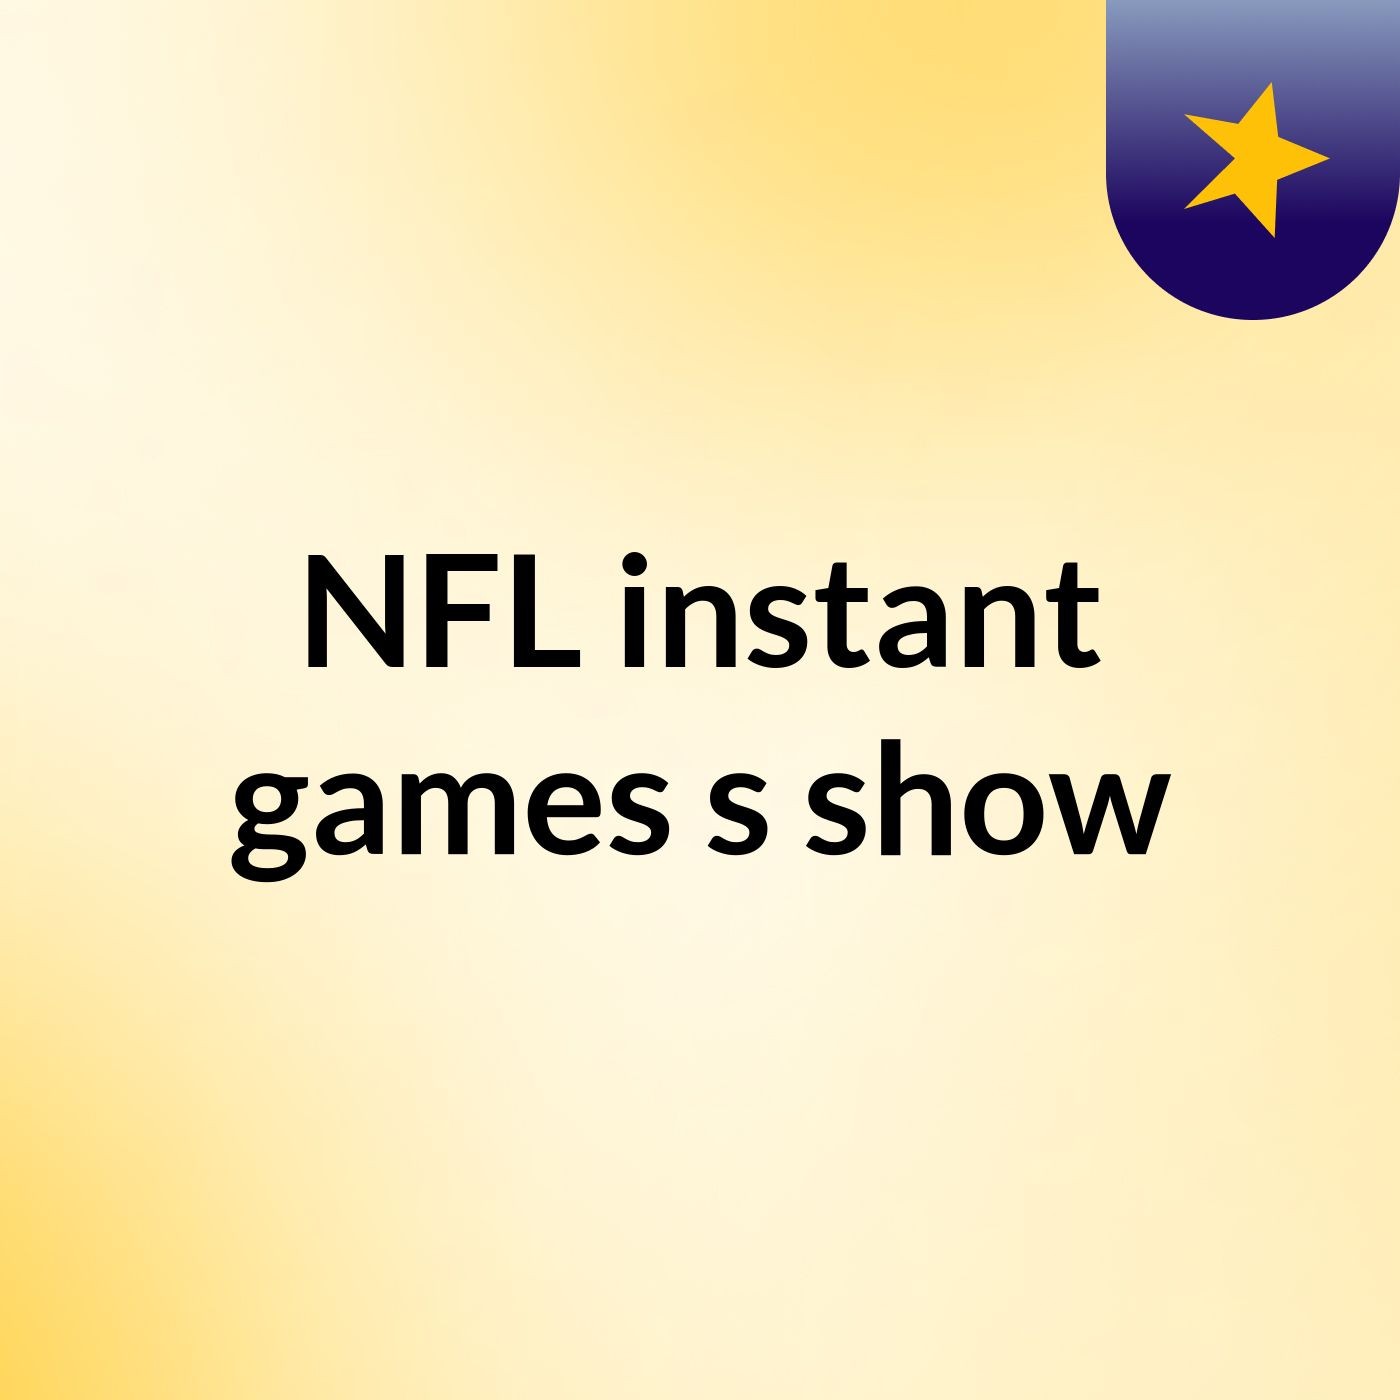 NFL instant games's show